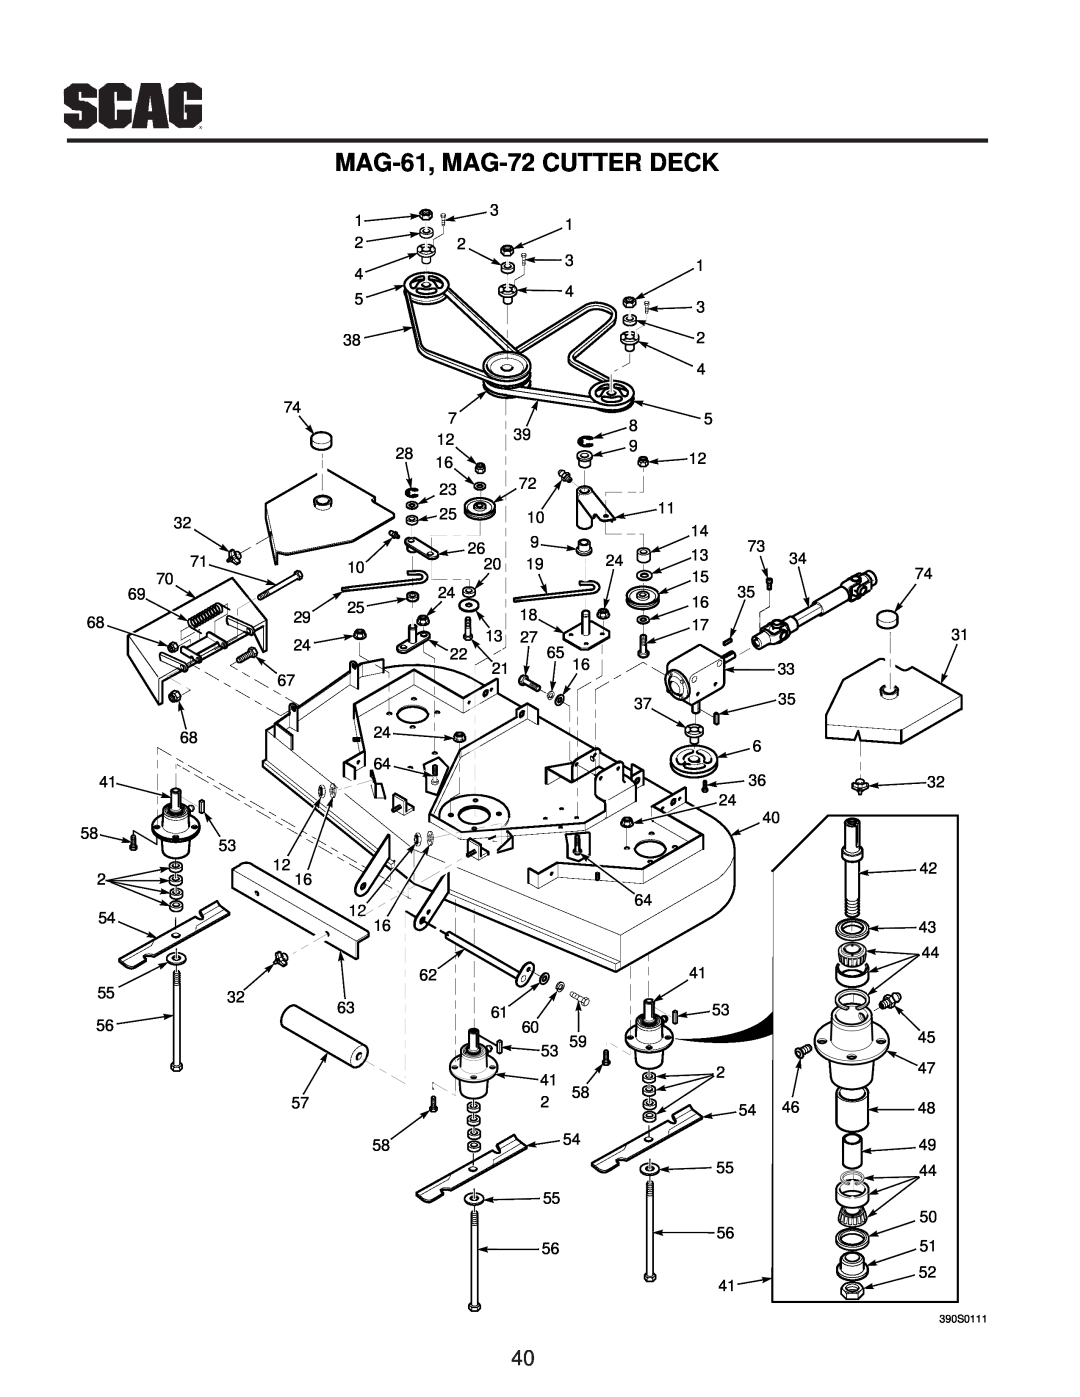 Scag Power Equipment manual MAG-61, MAG-72 CUTTER DECK, 390S0111 